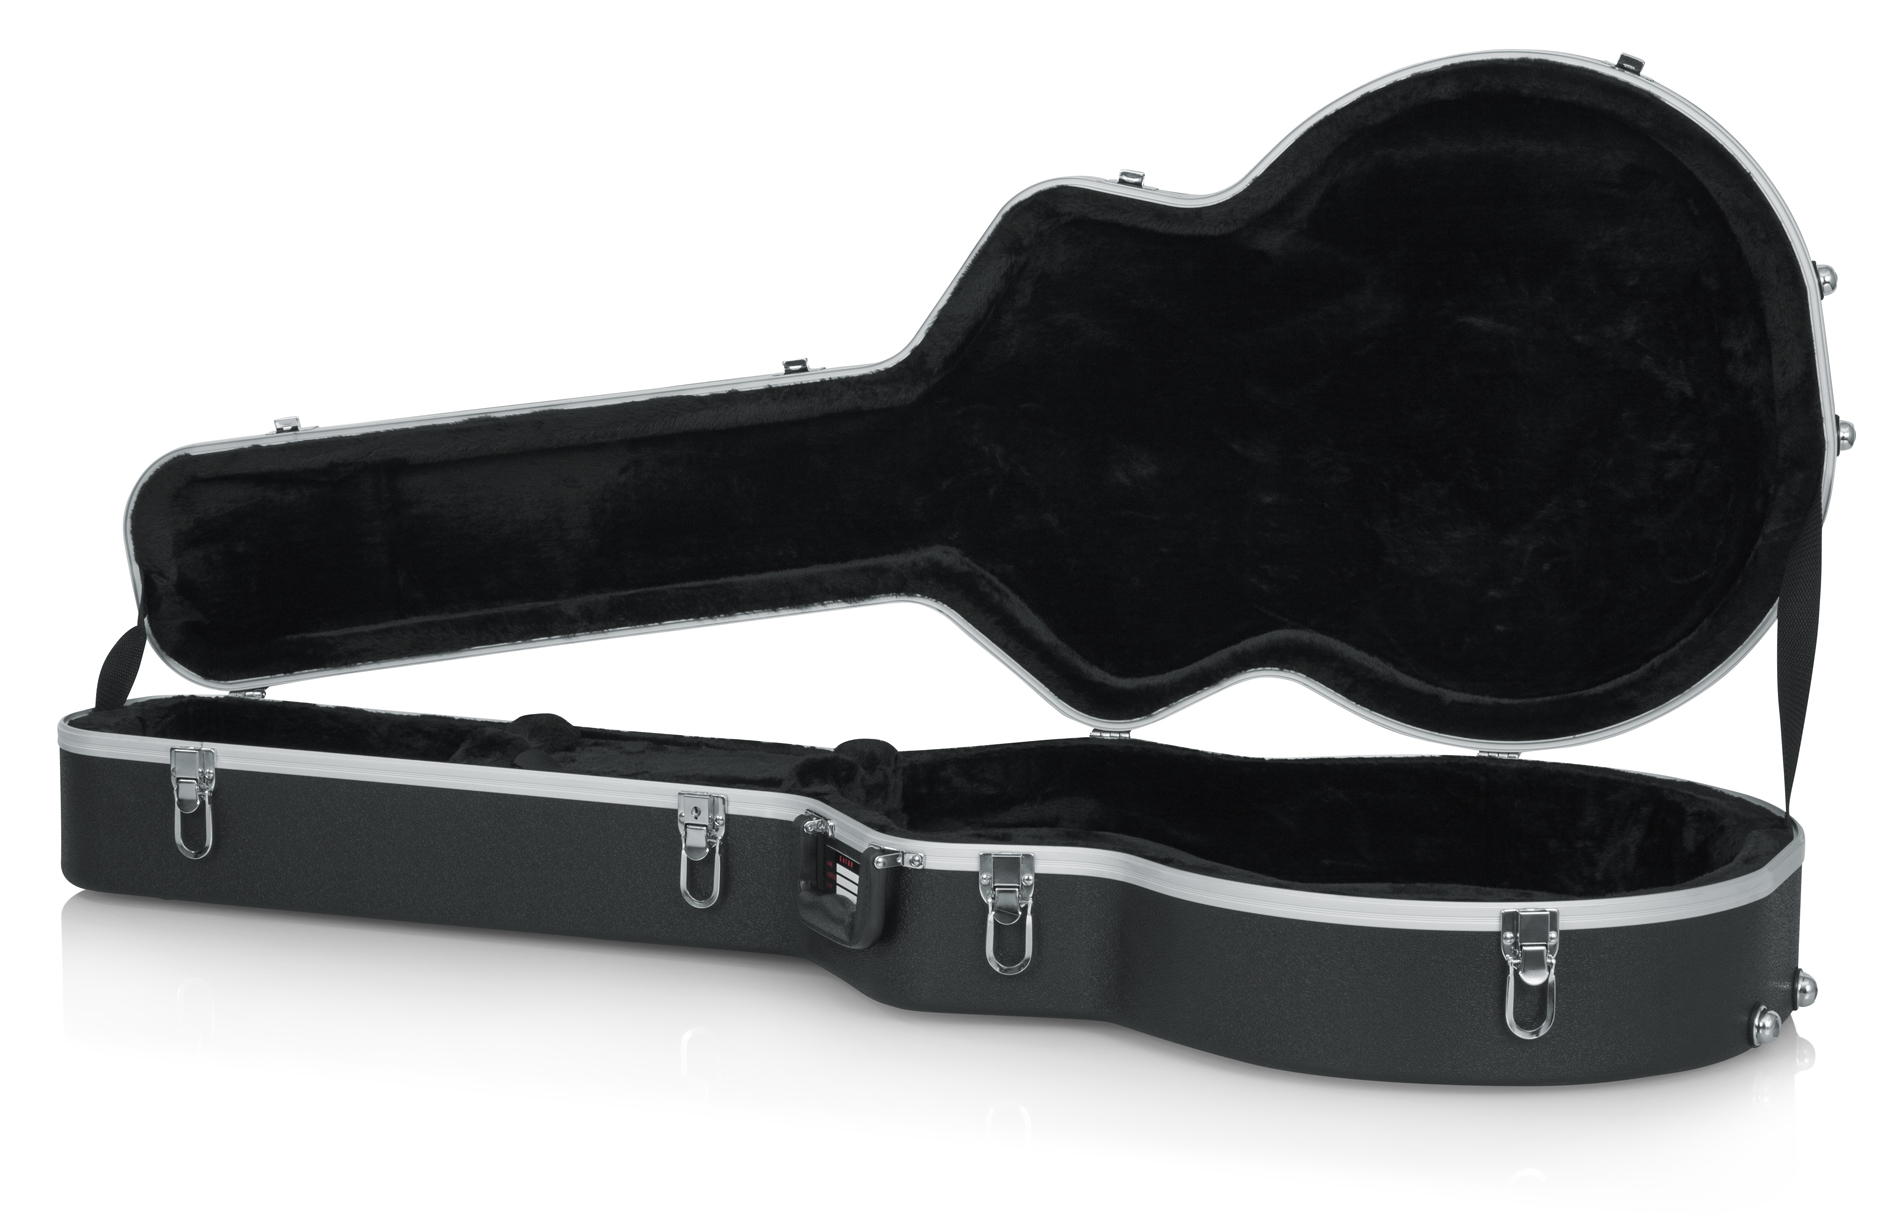 Semi-Hollow Style Guitar Case-GC-335